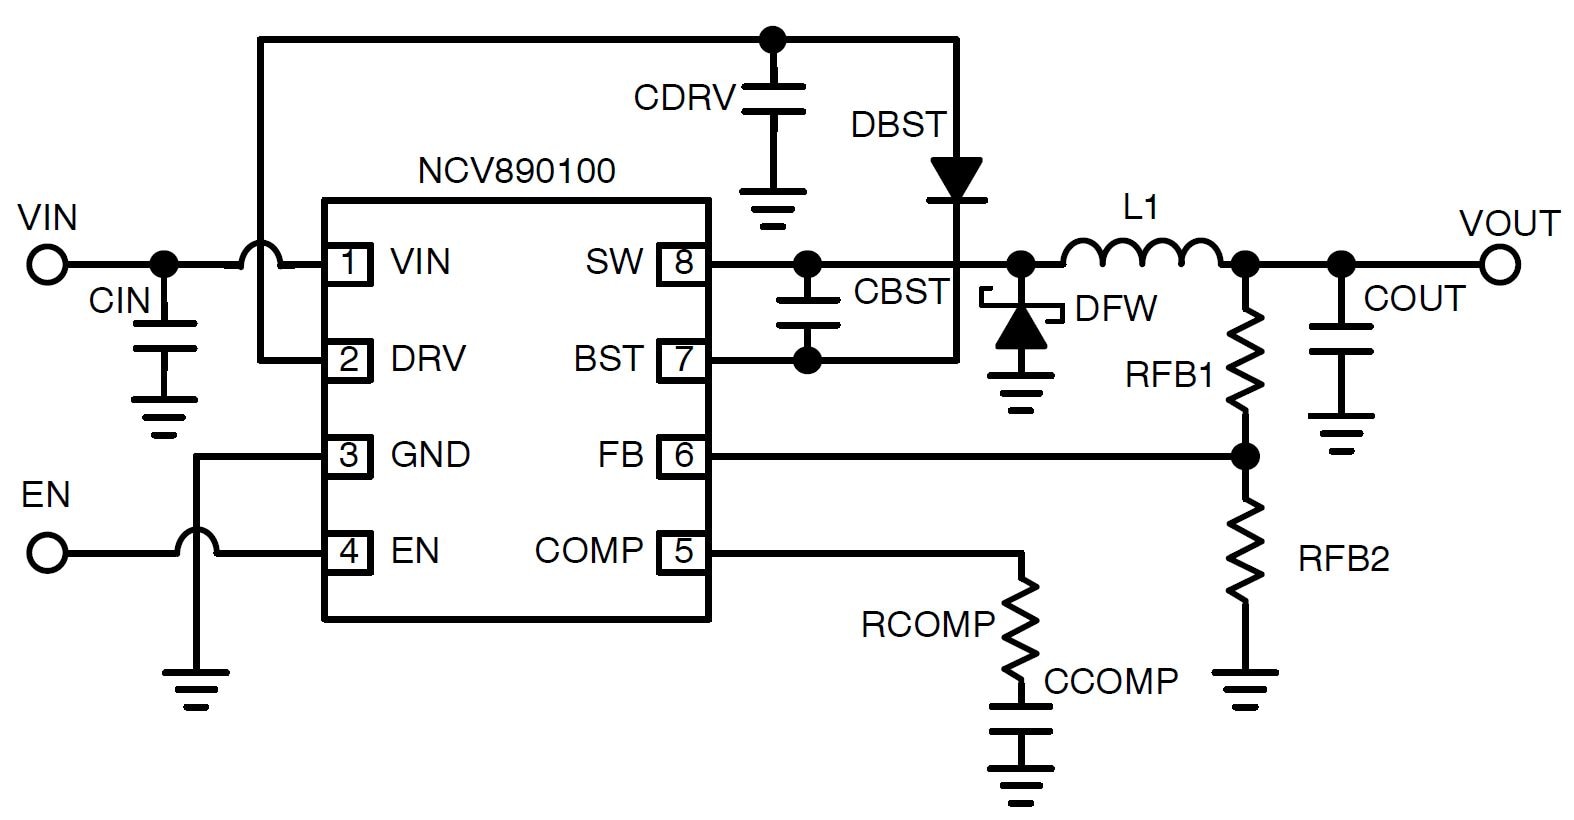 NCV890100: 車載用スイッチング・レギュレータ、降圧、1.2、2 MHz